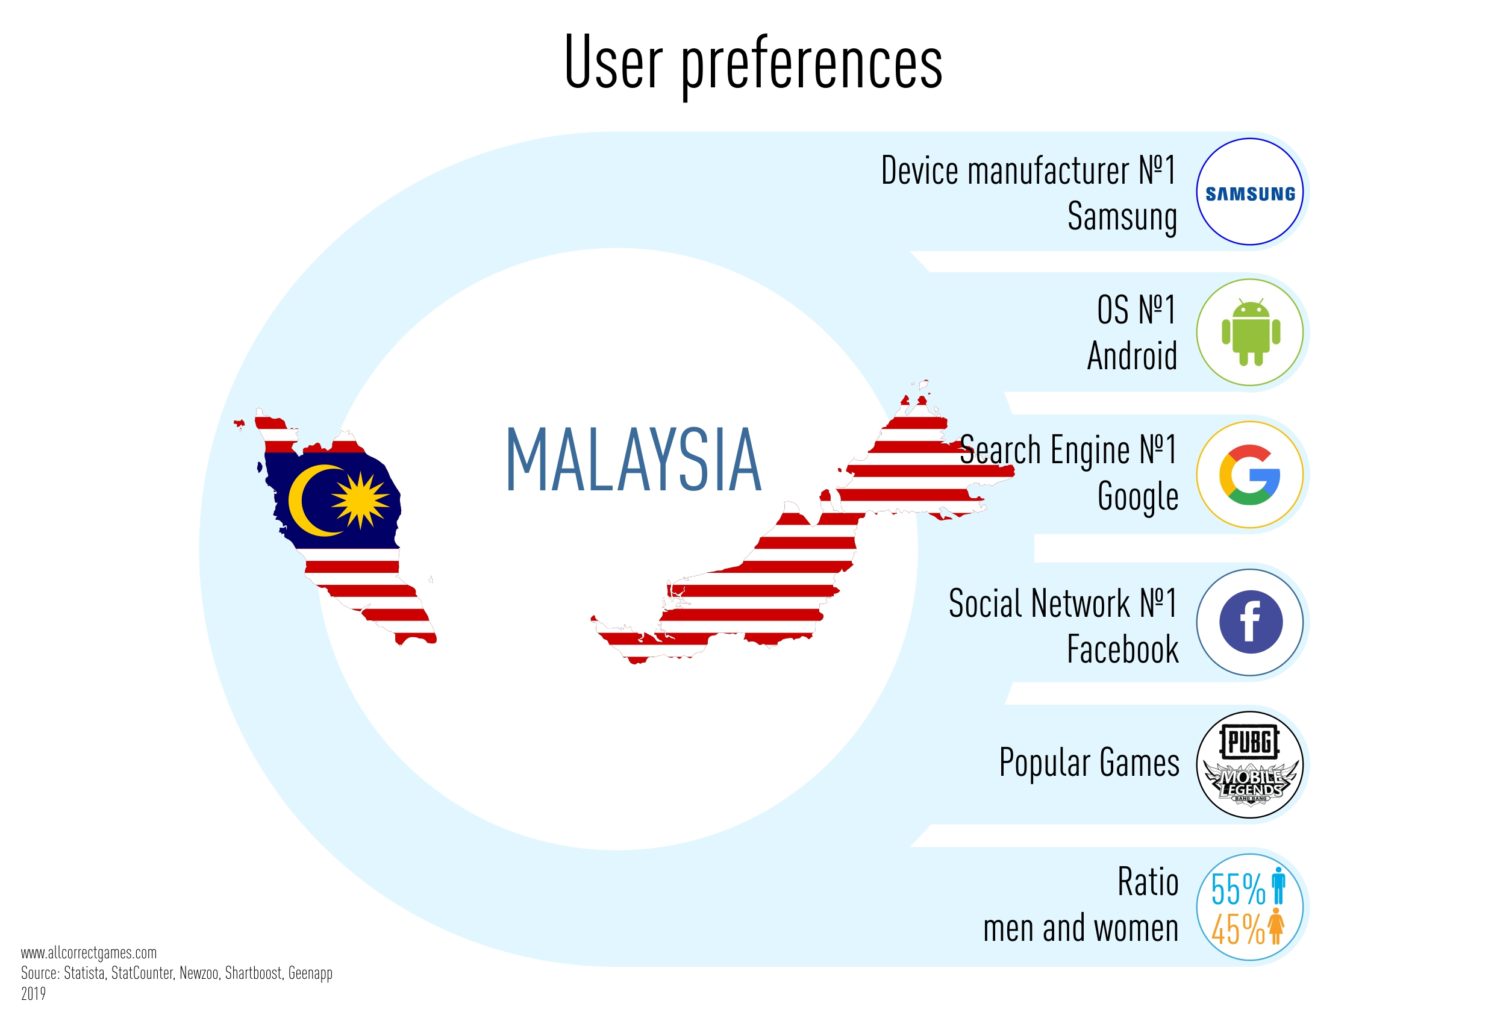 Malaysia Mobile Game Market